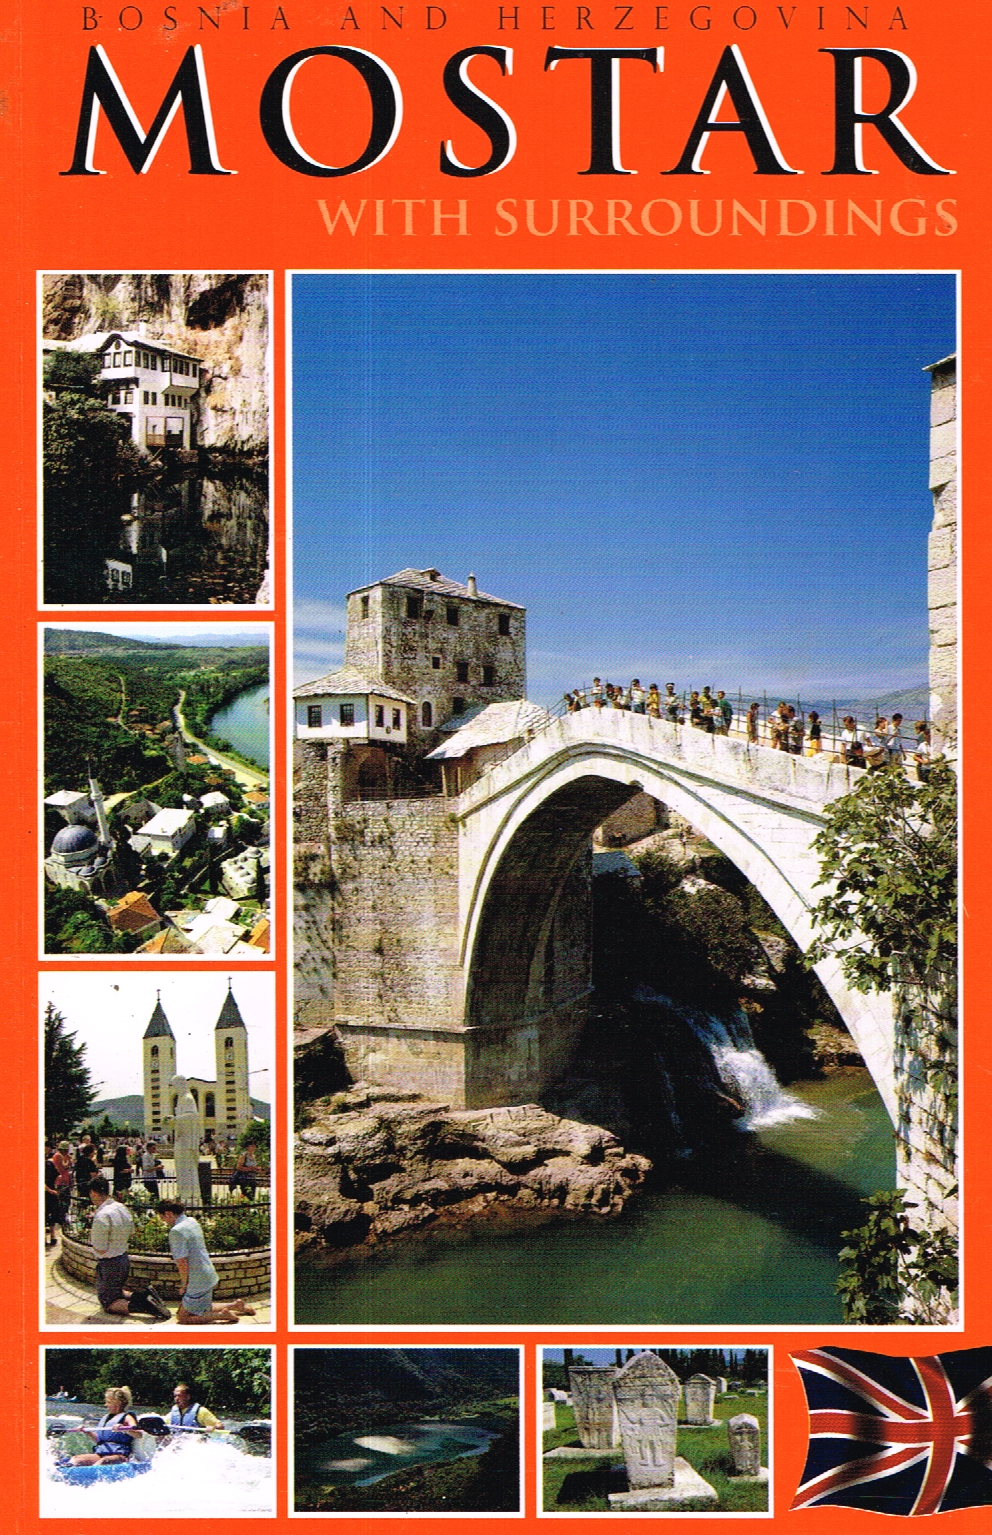 Bosnia and Herzegovina: Mostar with Surroundings